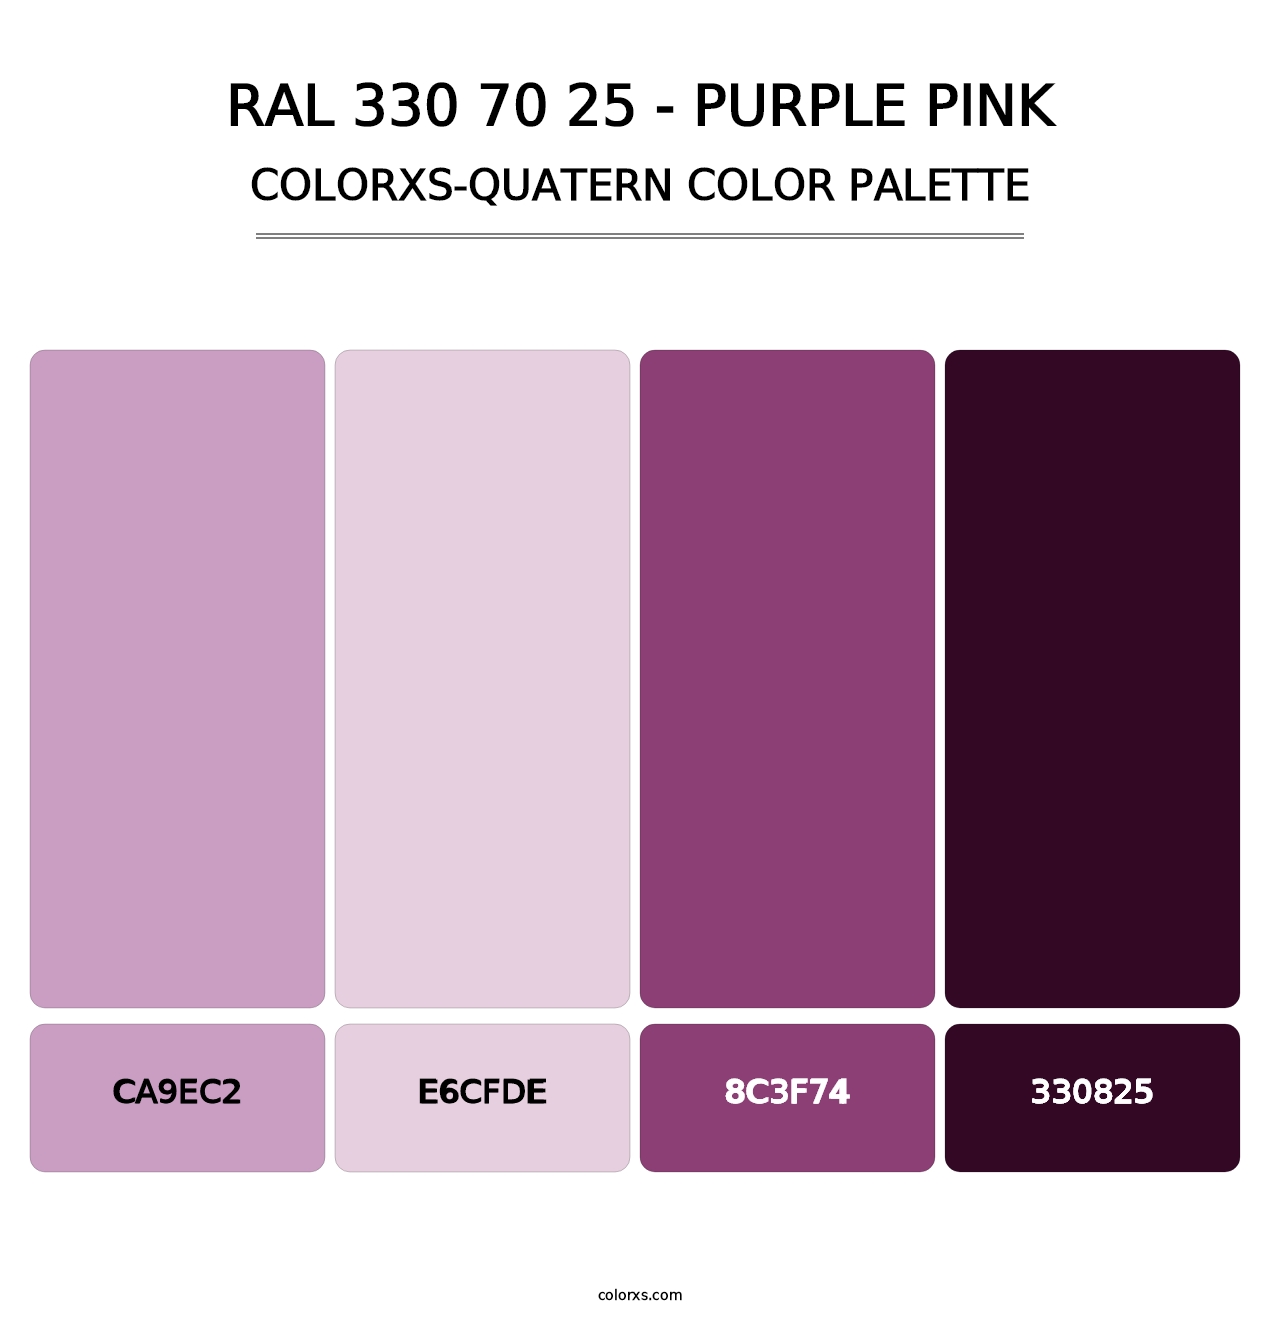 RAL 330 70 25 - Purple Pink - Colorxs Quatern Palette